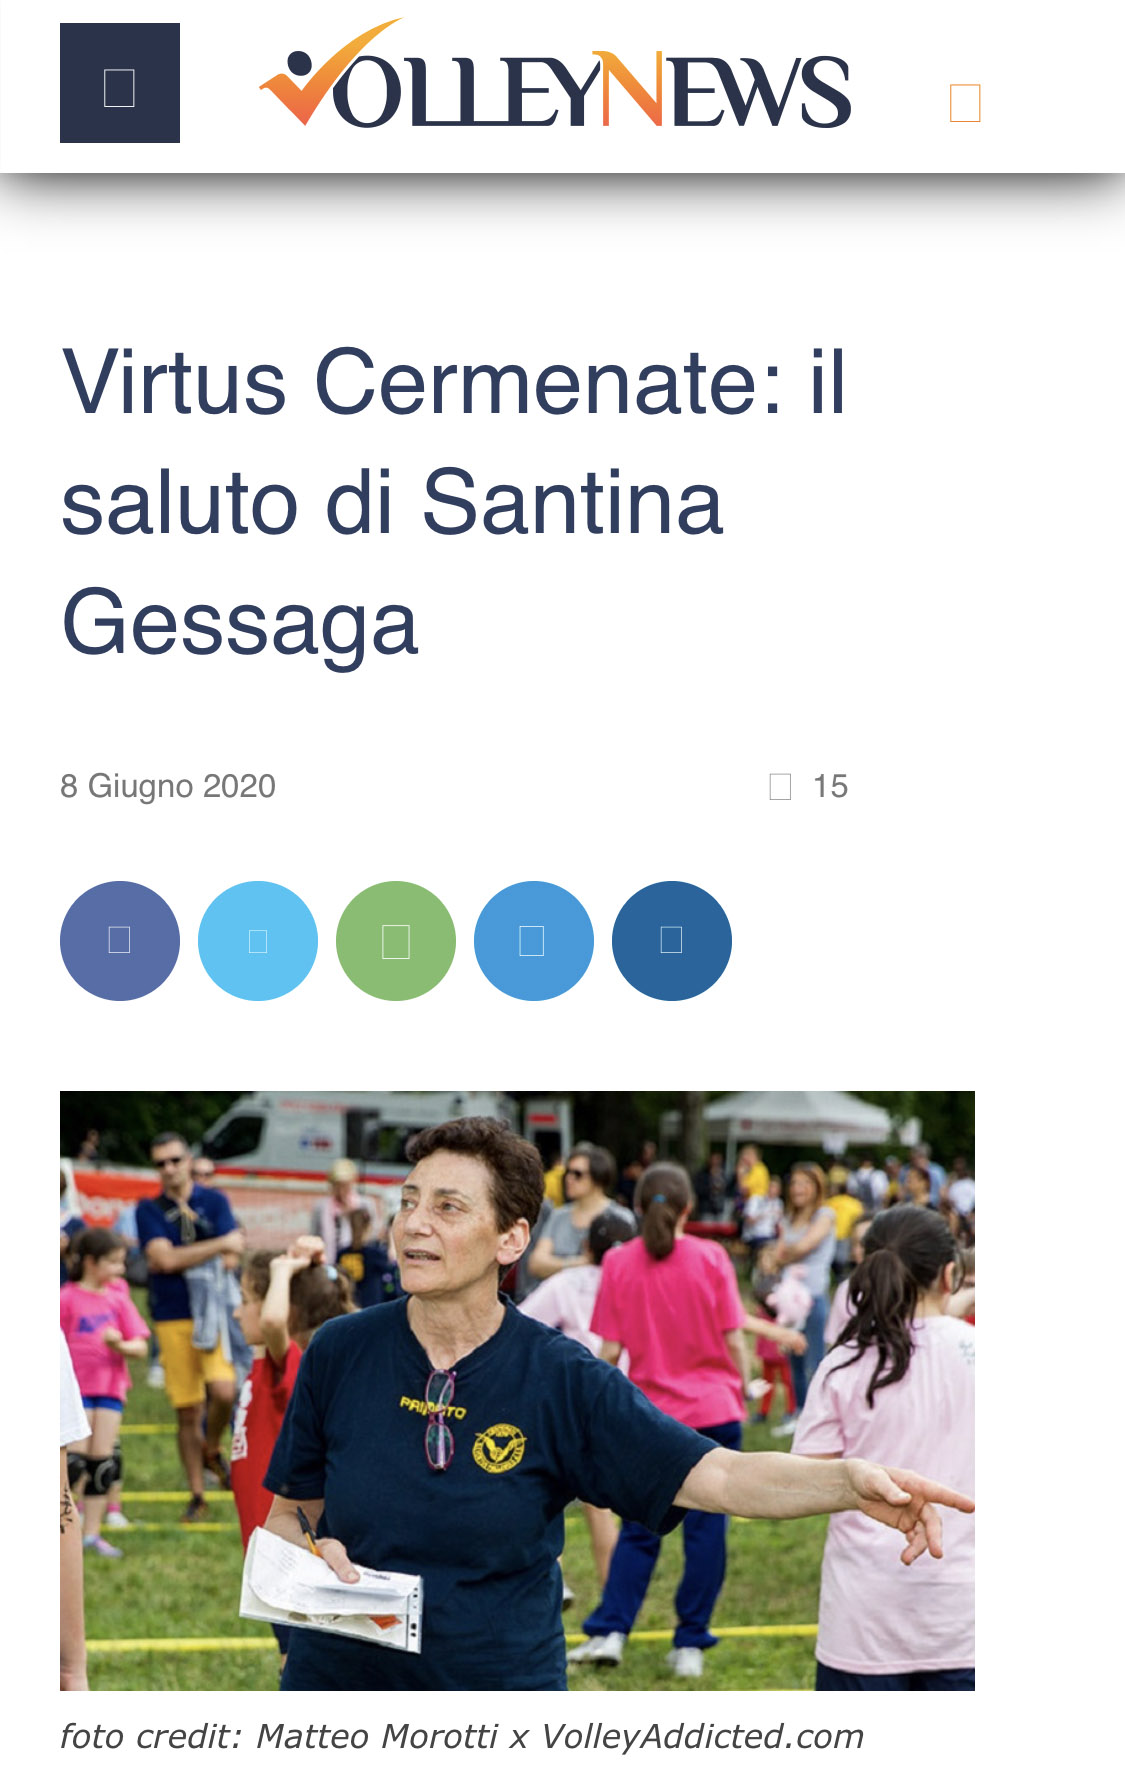 Volley News - il saluto di Santina Gessaga